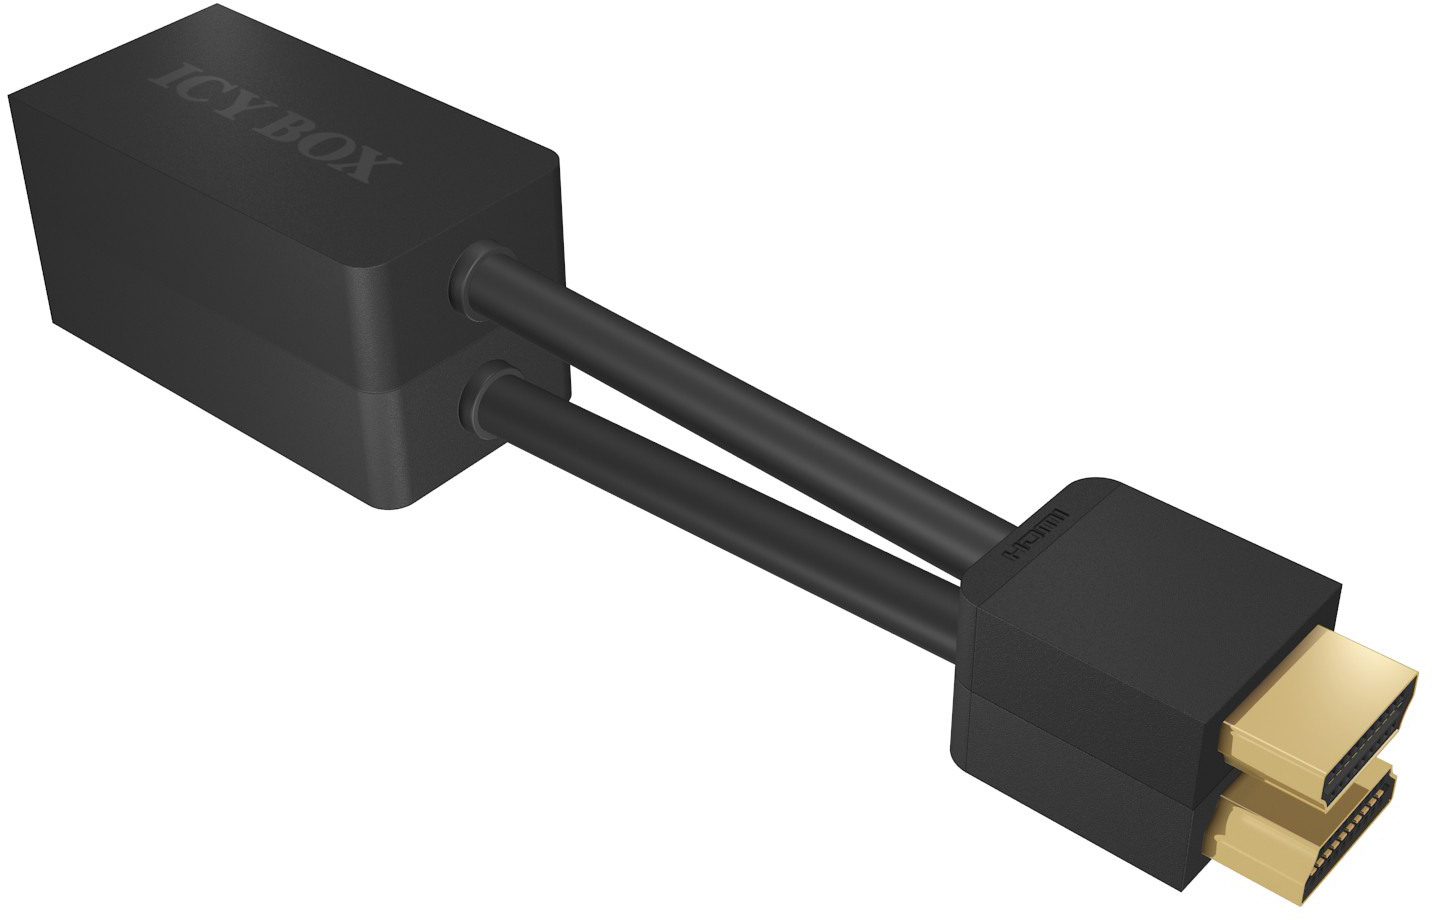 ICY BOX HDMI zu VGA Adapter IB-AC502